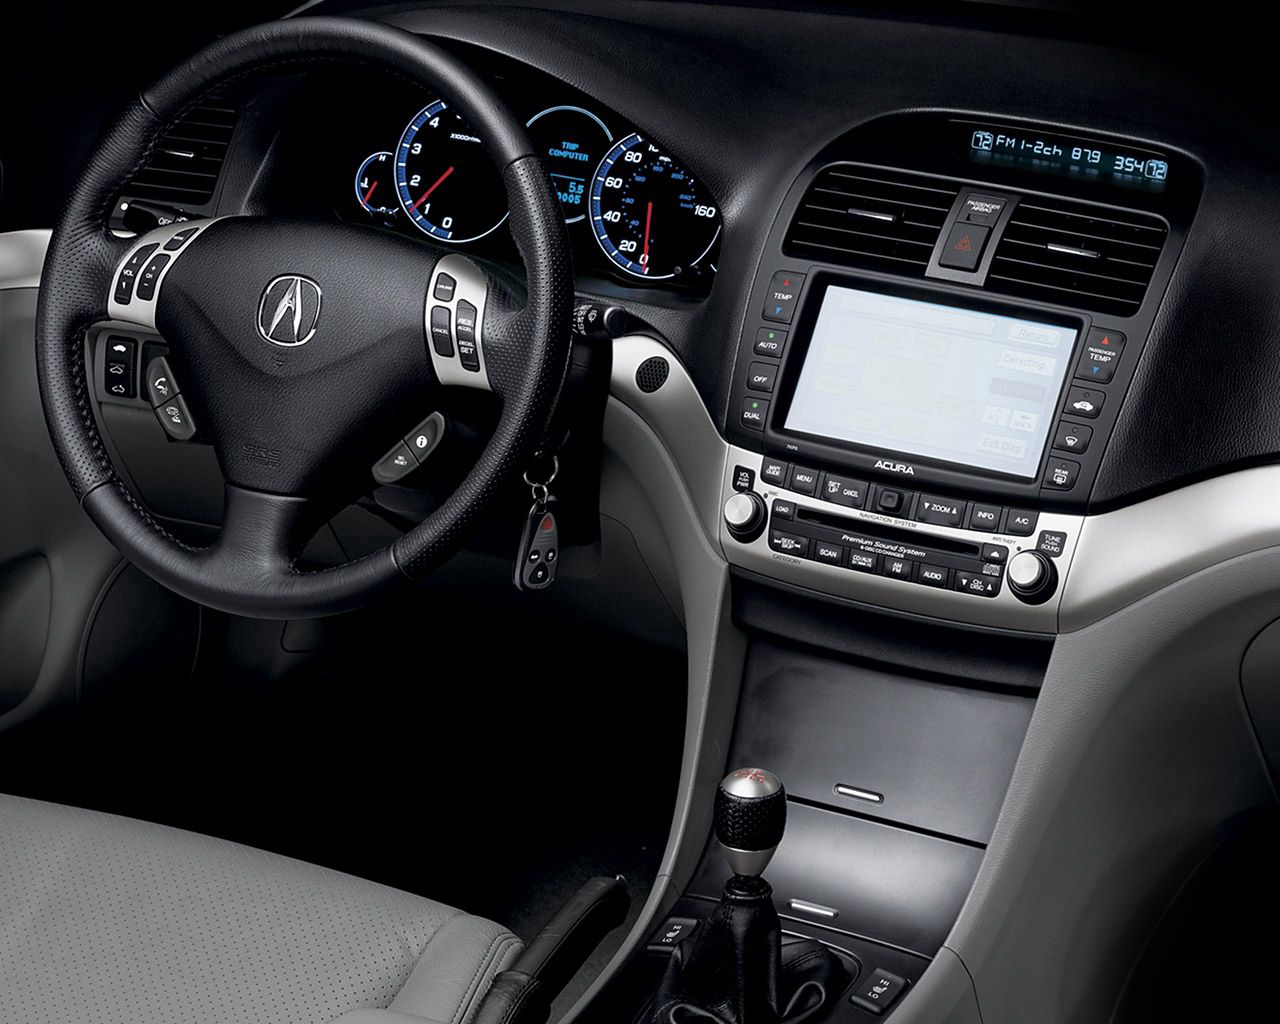 rudder, salon, steering wheel, speedometer, acura, interior, cars, tsx lock screen backgrounds